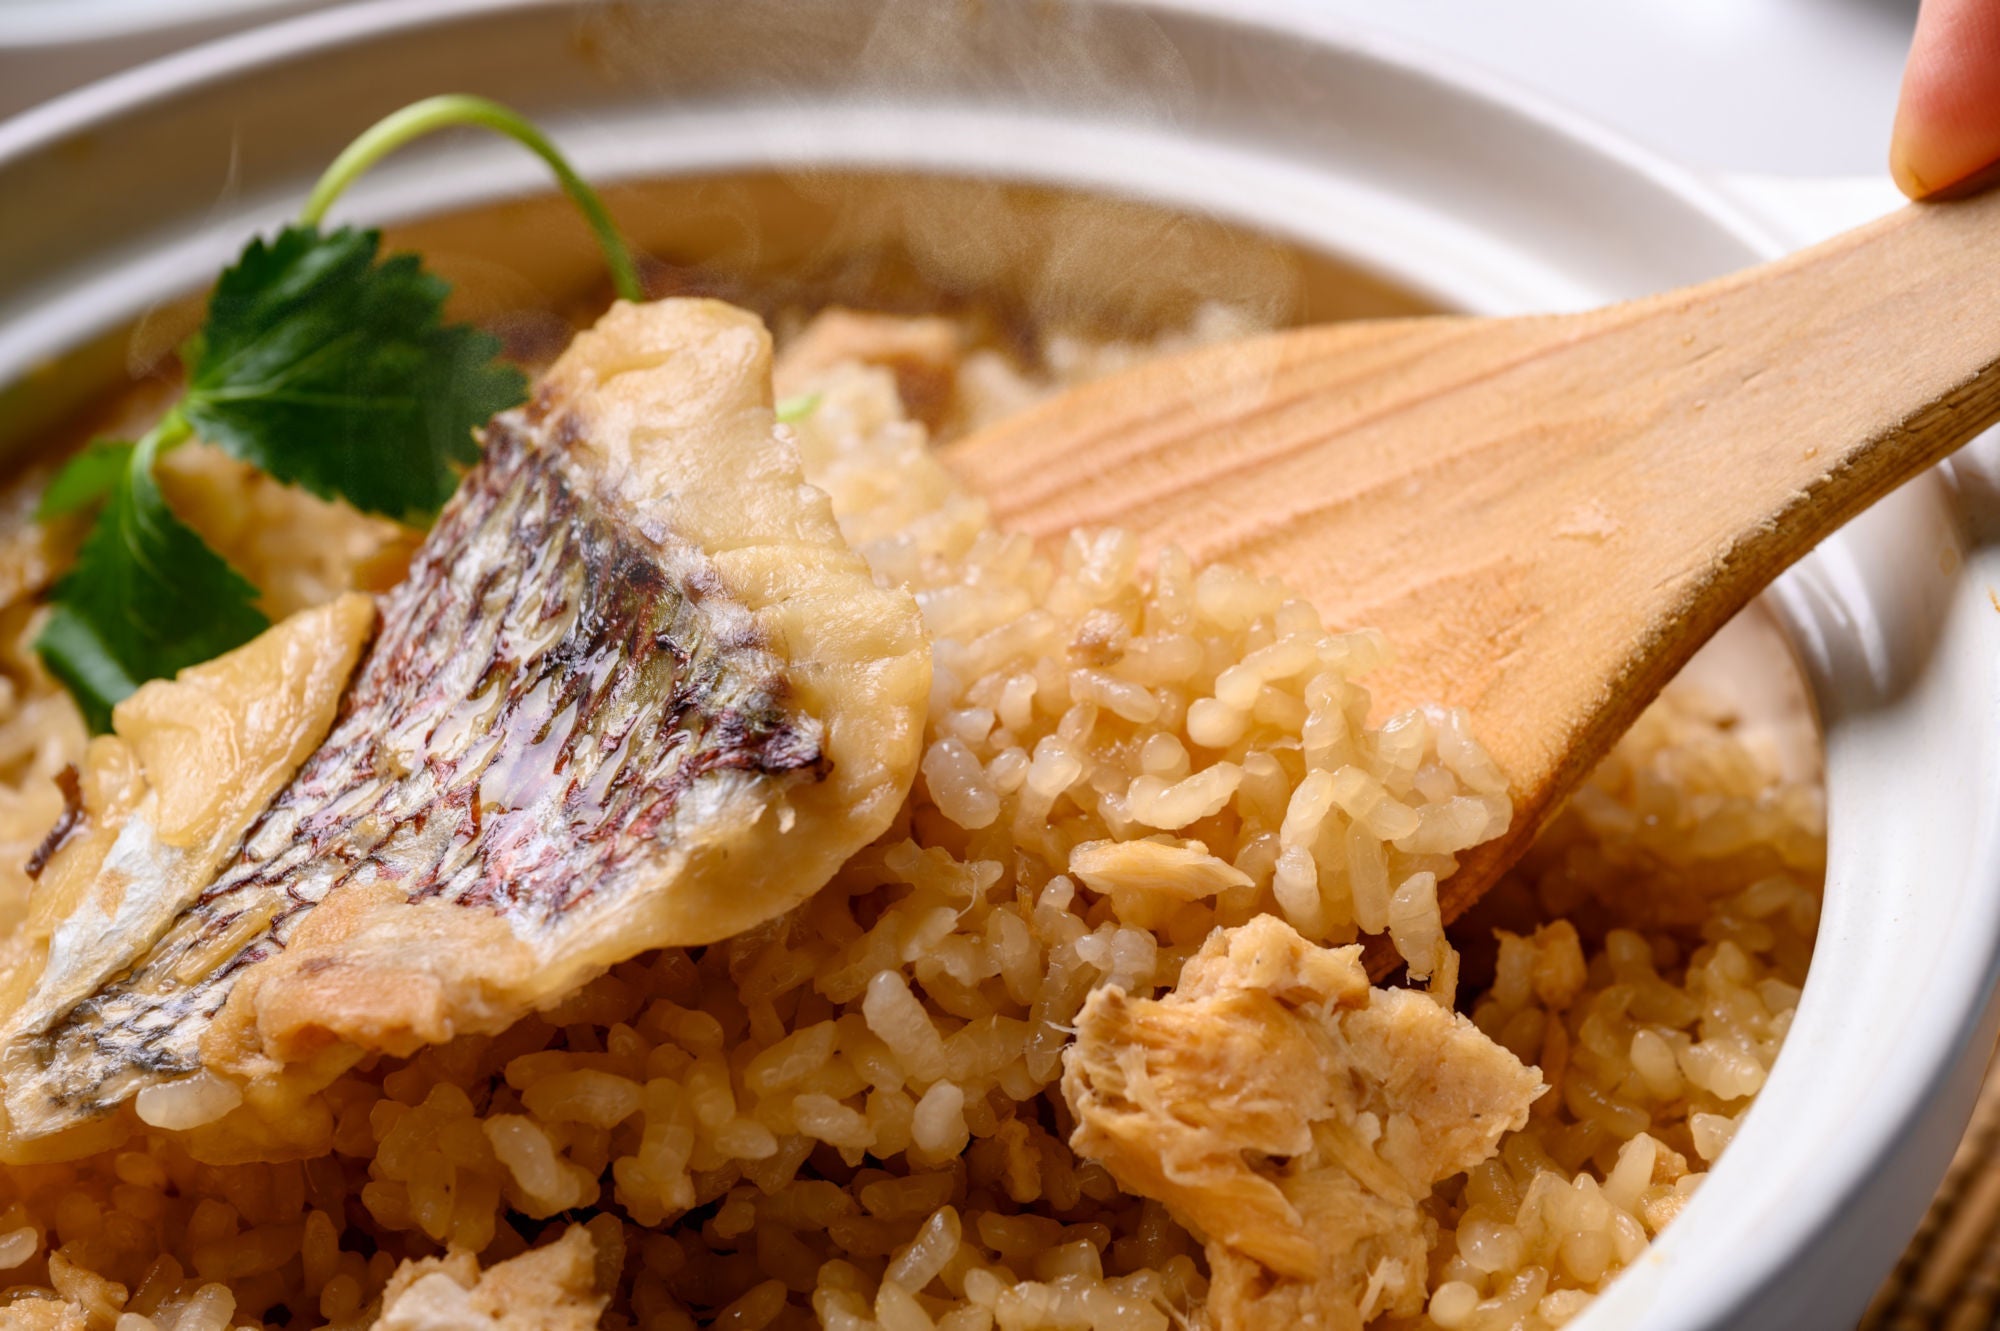 MARUHISA Kishu Miyabi Sea Bream Rice - Tokyo Fresh Direct